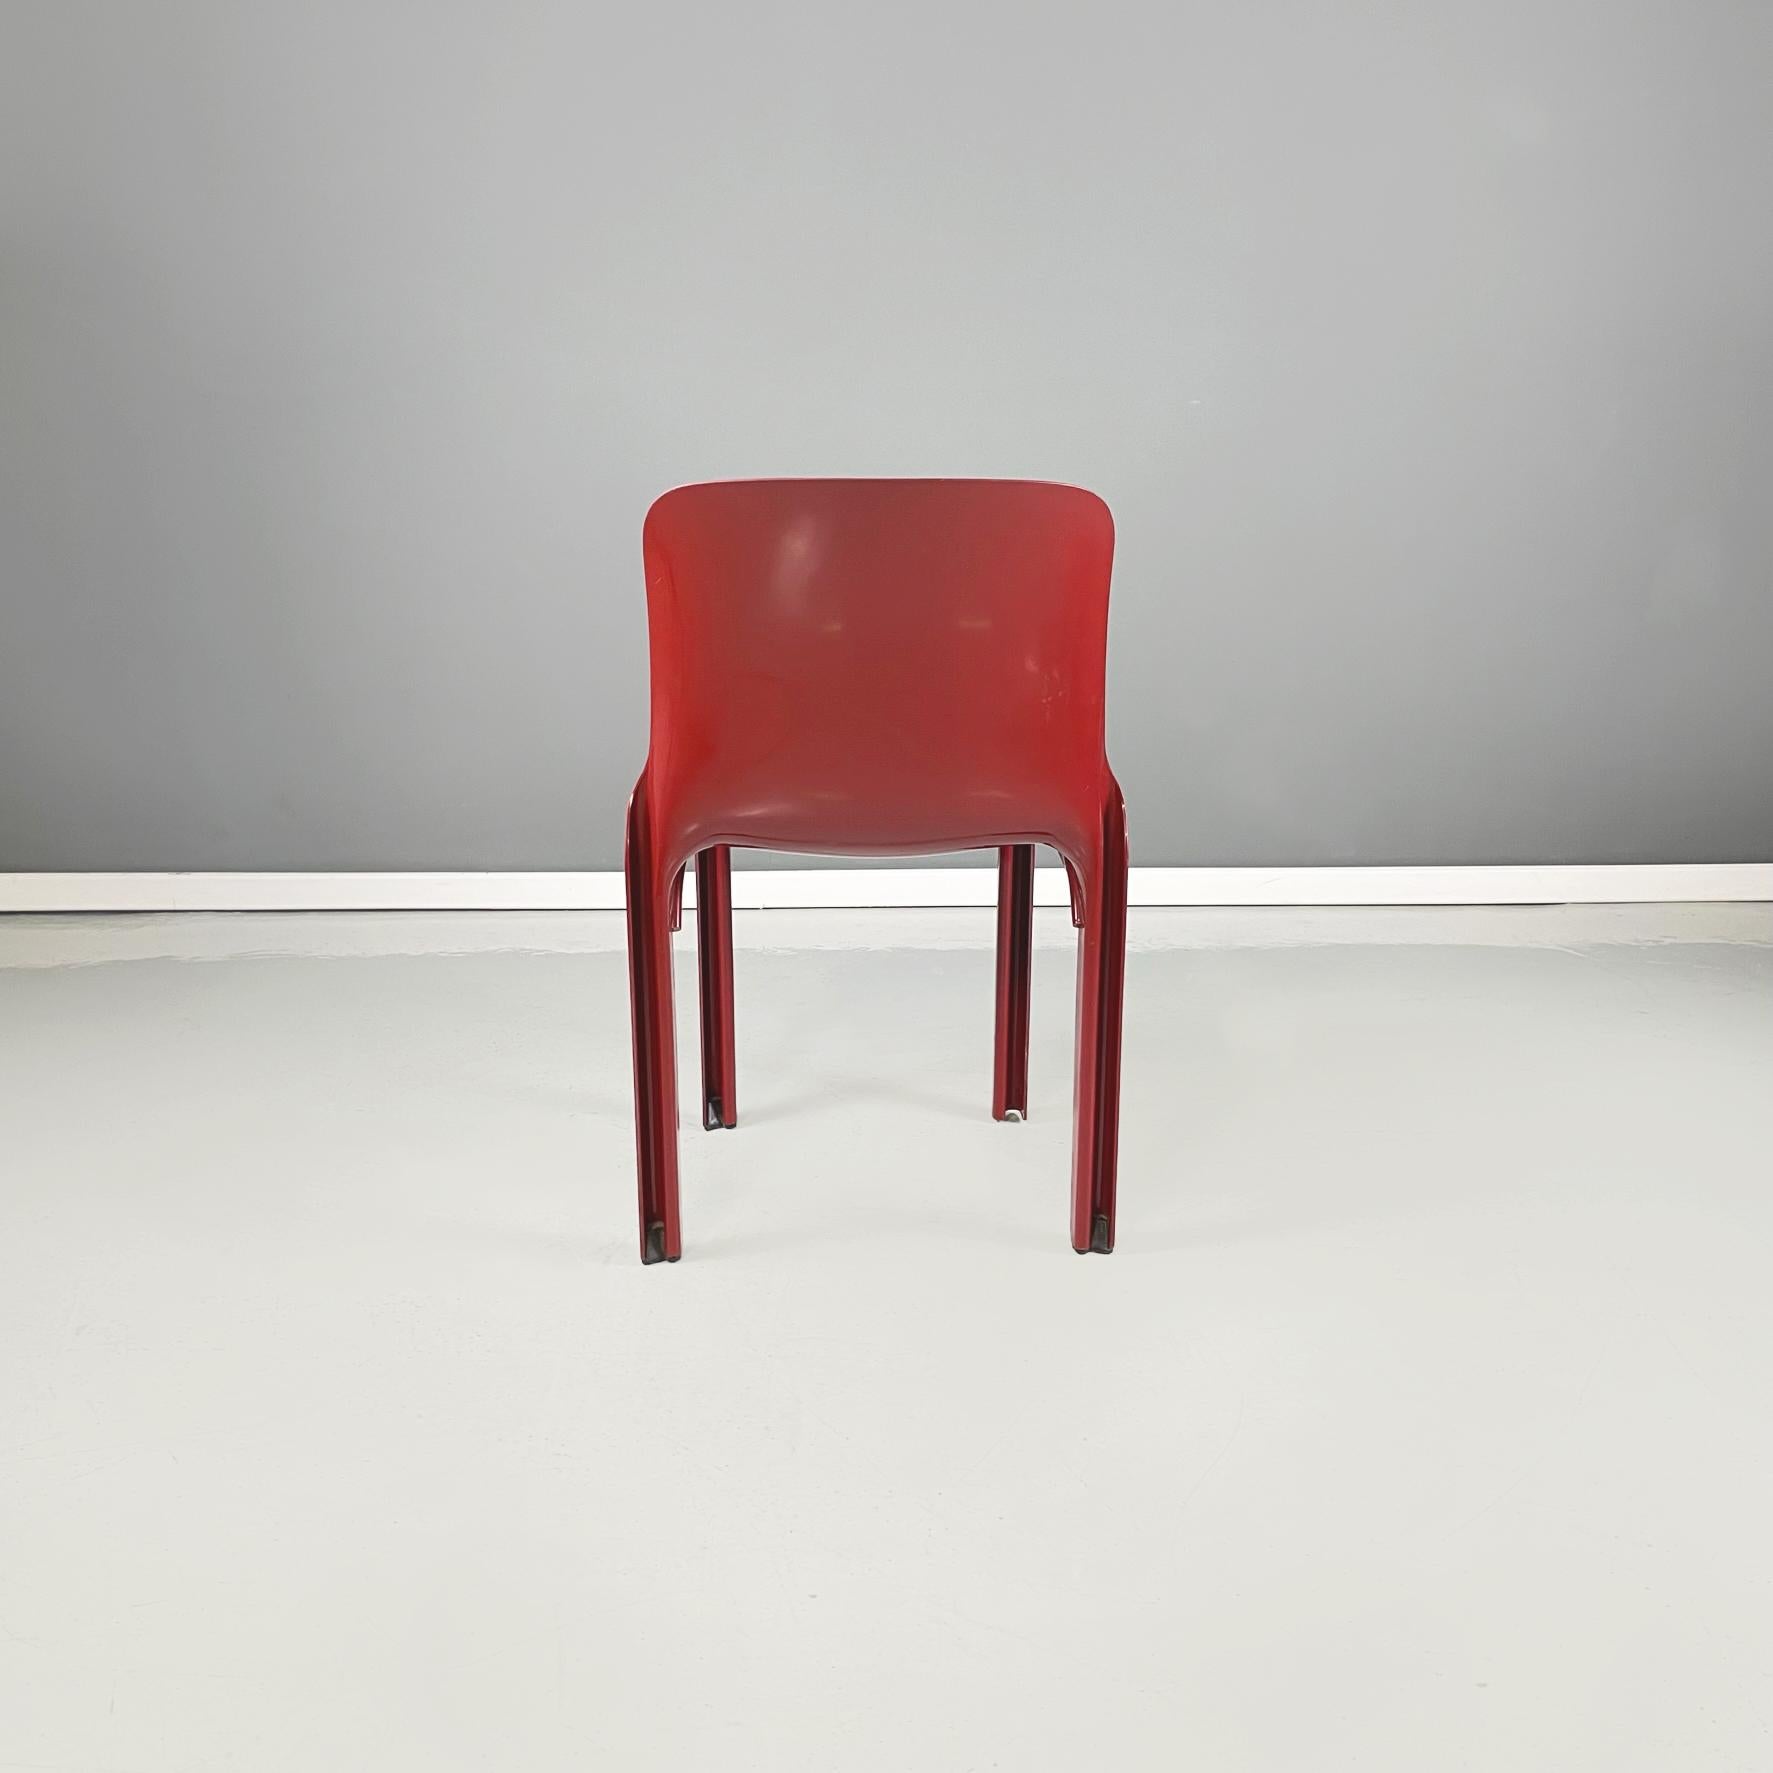 Modern Italian modern plastic red Chairs Selene by Vico Magistretti for Artemide, 1960s For Sale